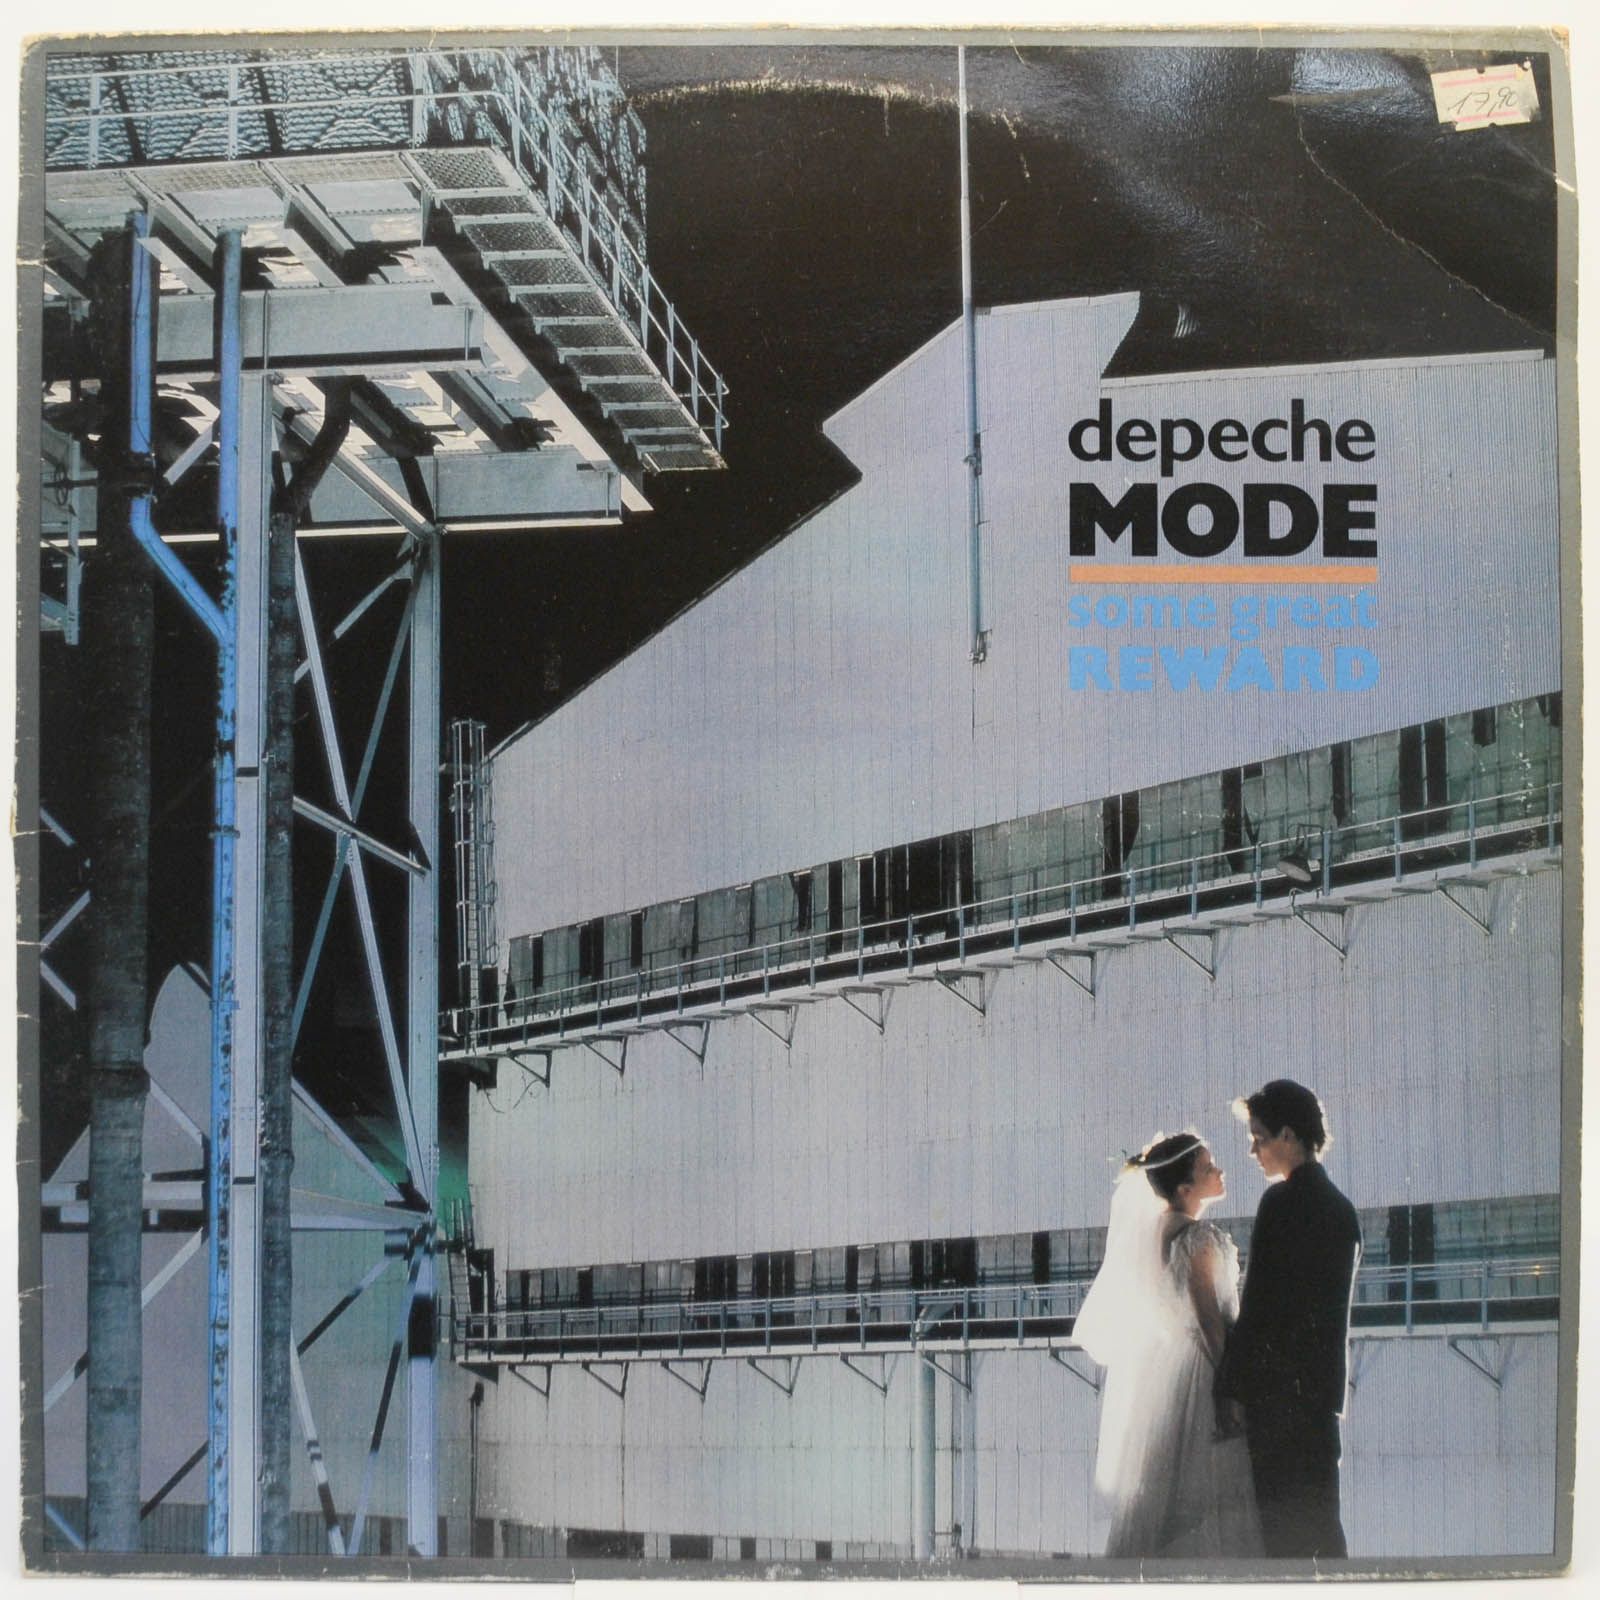 Depeche Mode — Some Great Reward, 1984